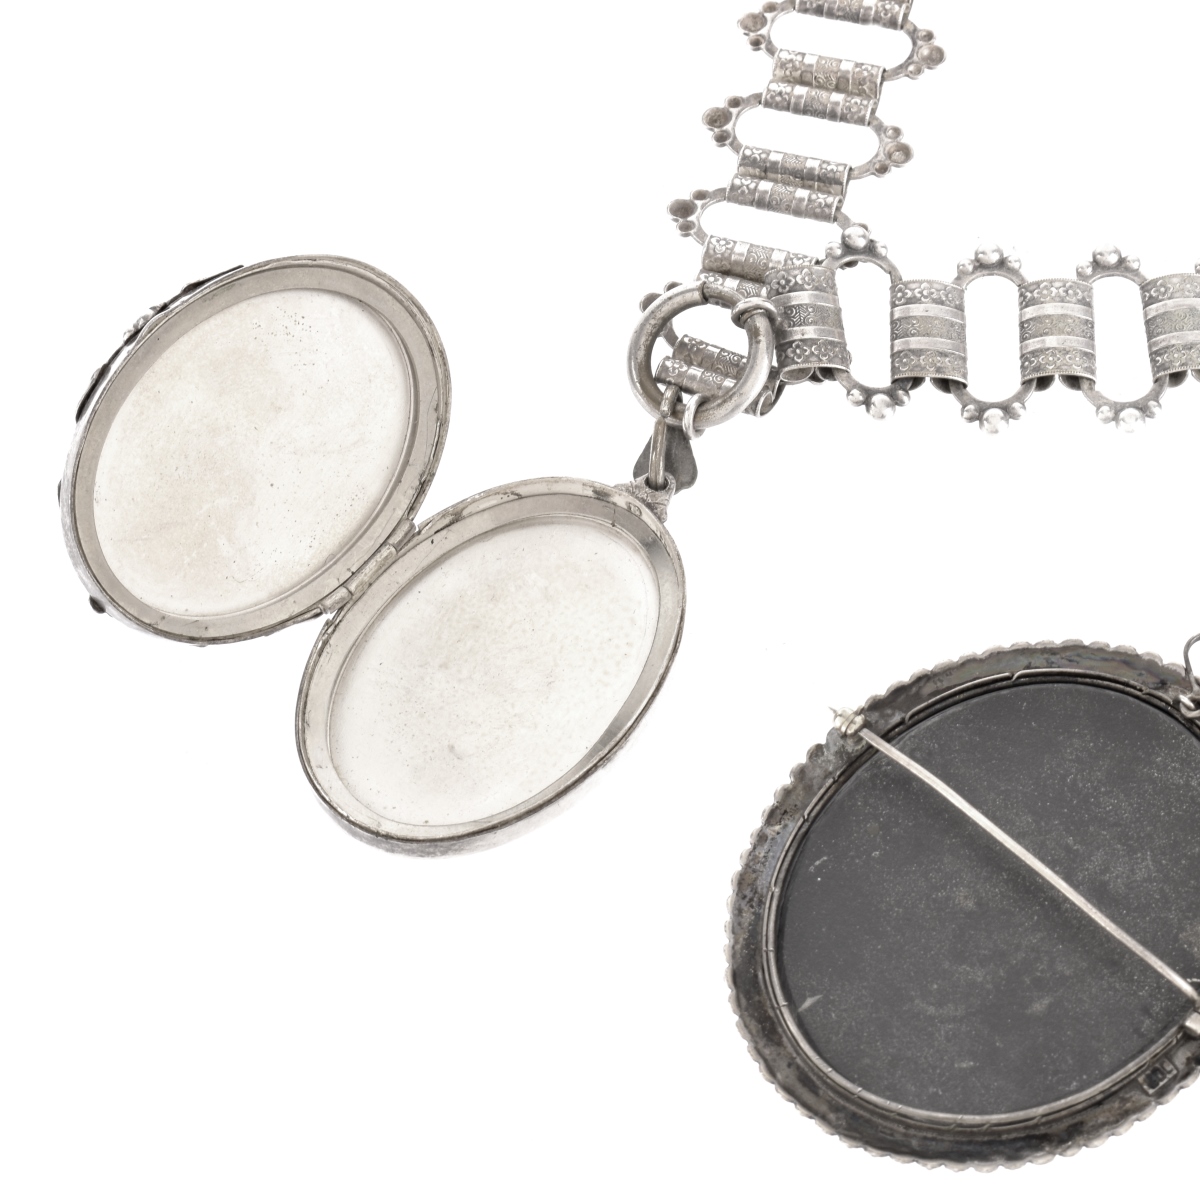 Antique Silver Necklace and Pietra Dura Pendant